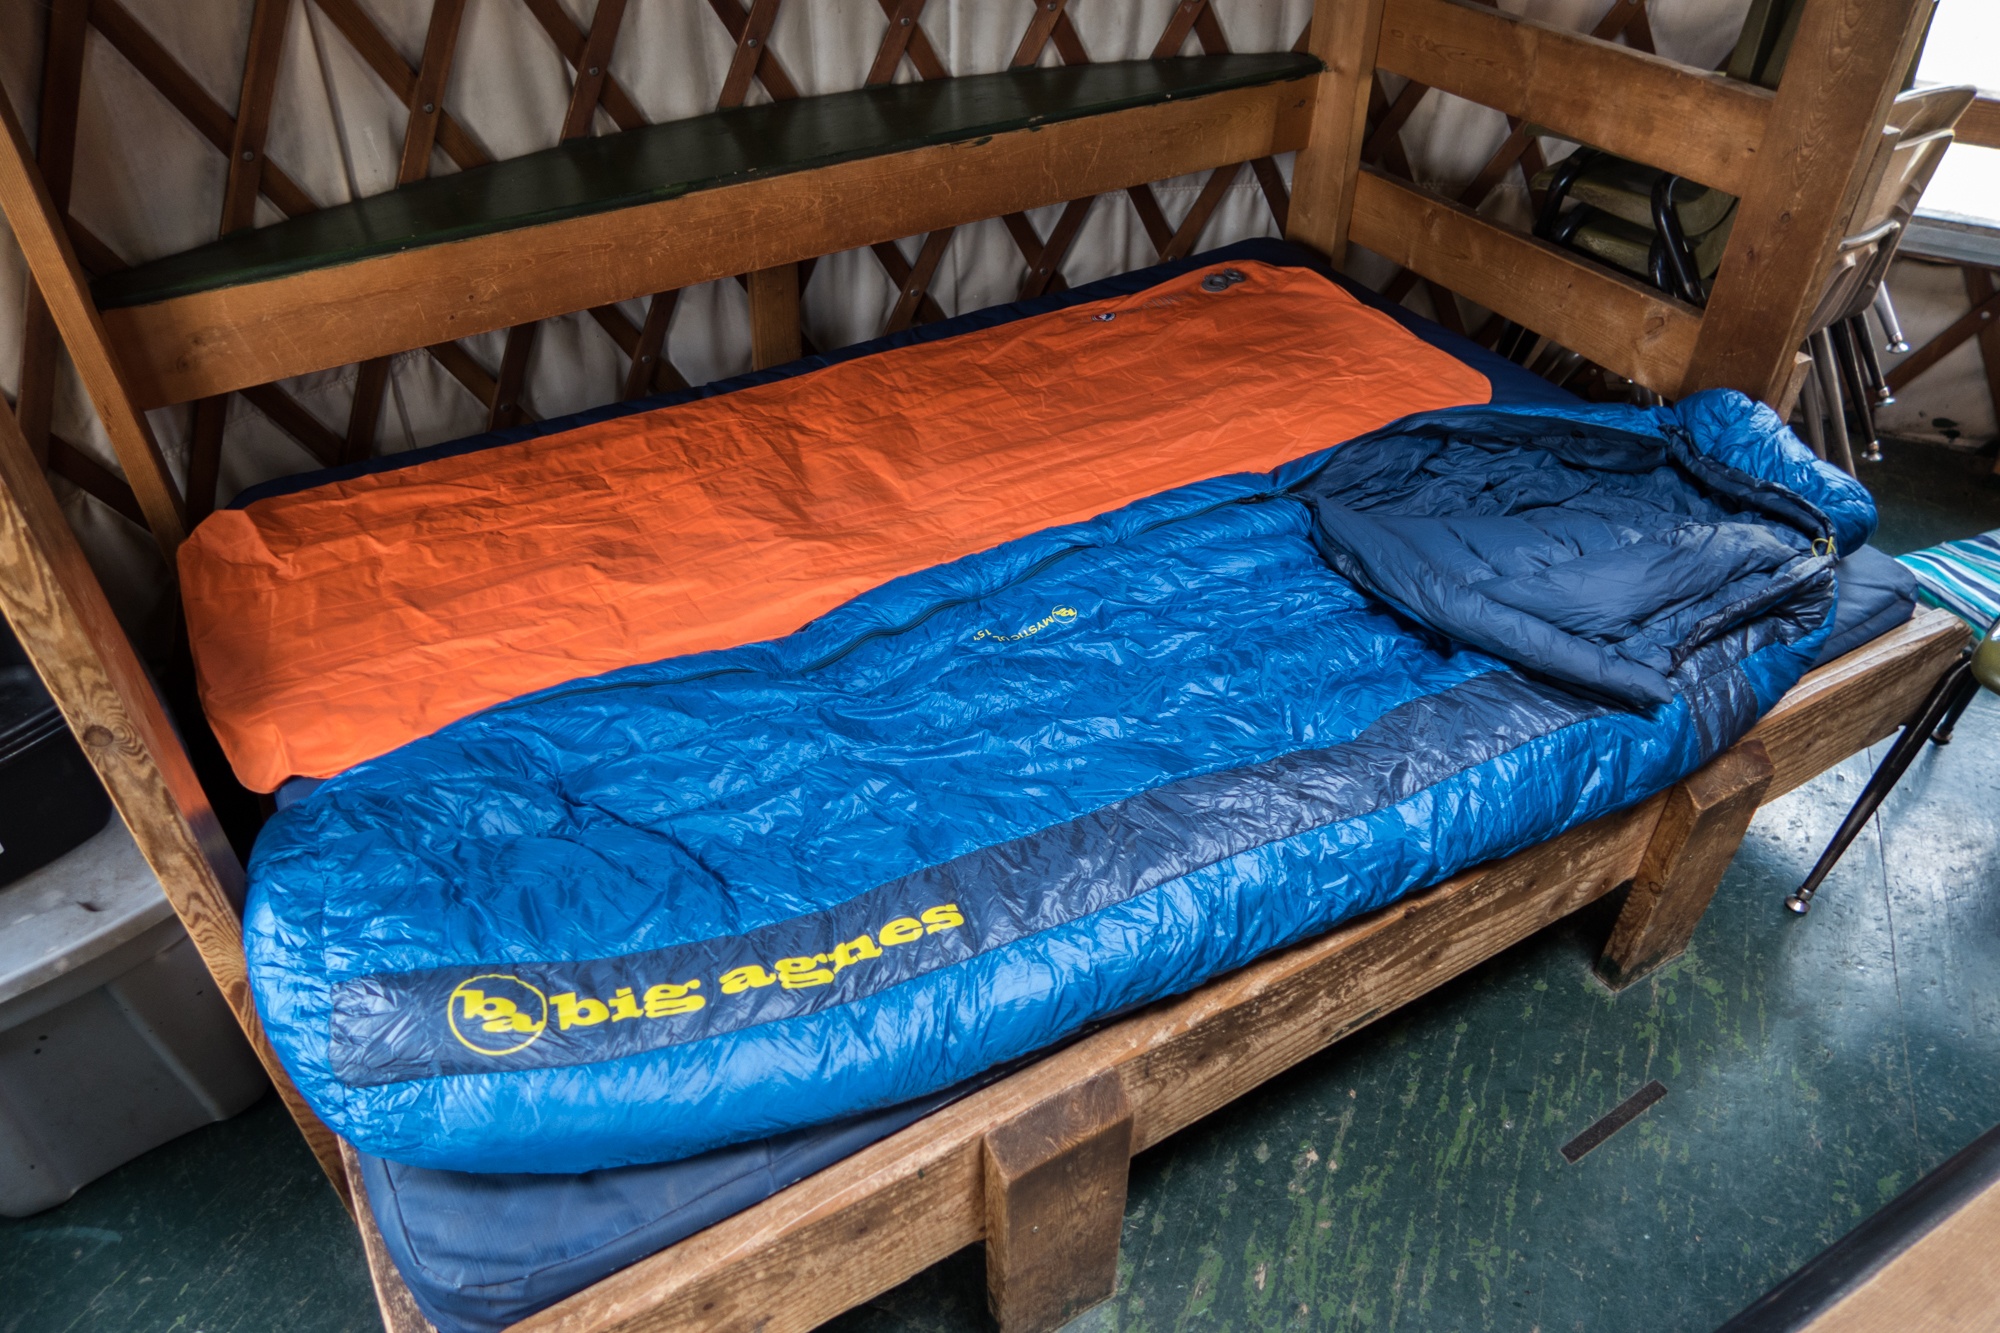 Big Agnes sleeping bag in a yurt in Colorado (photo: David Lee)